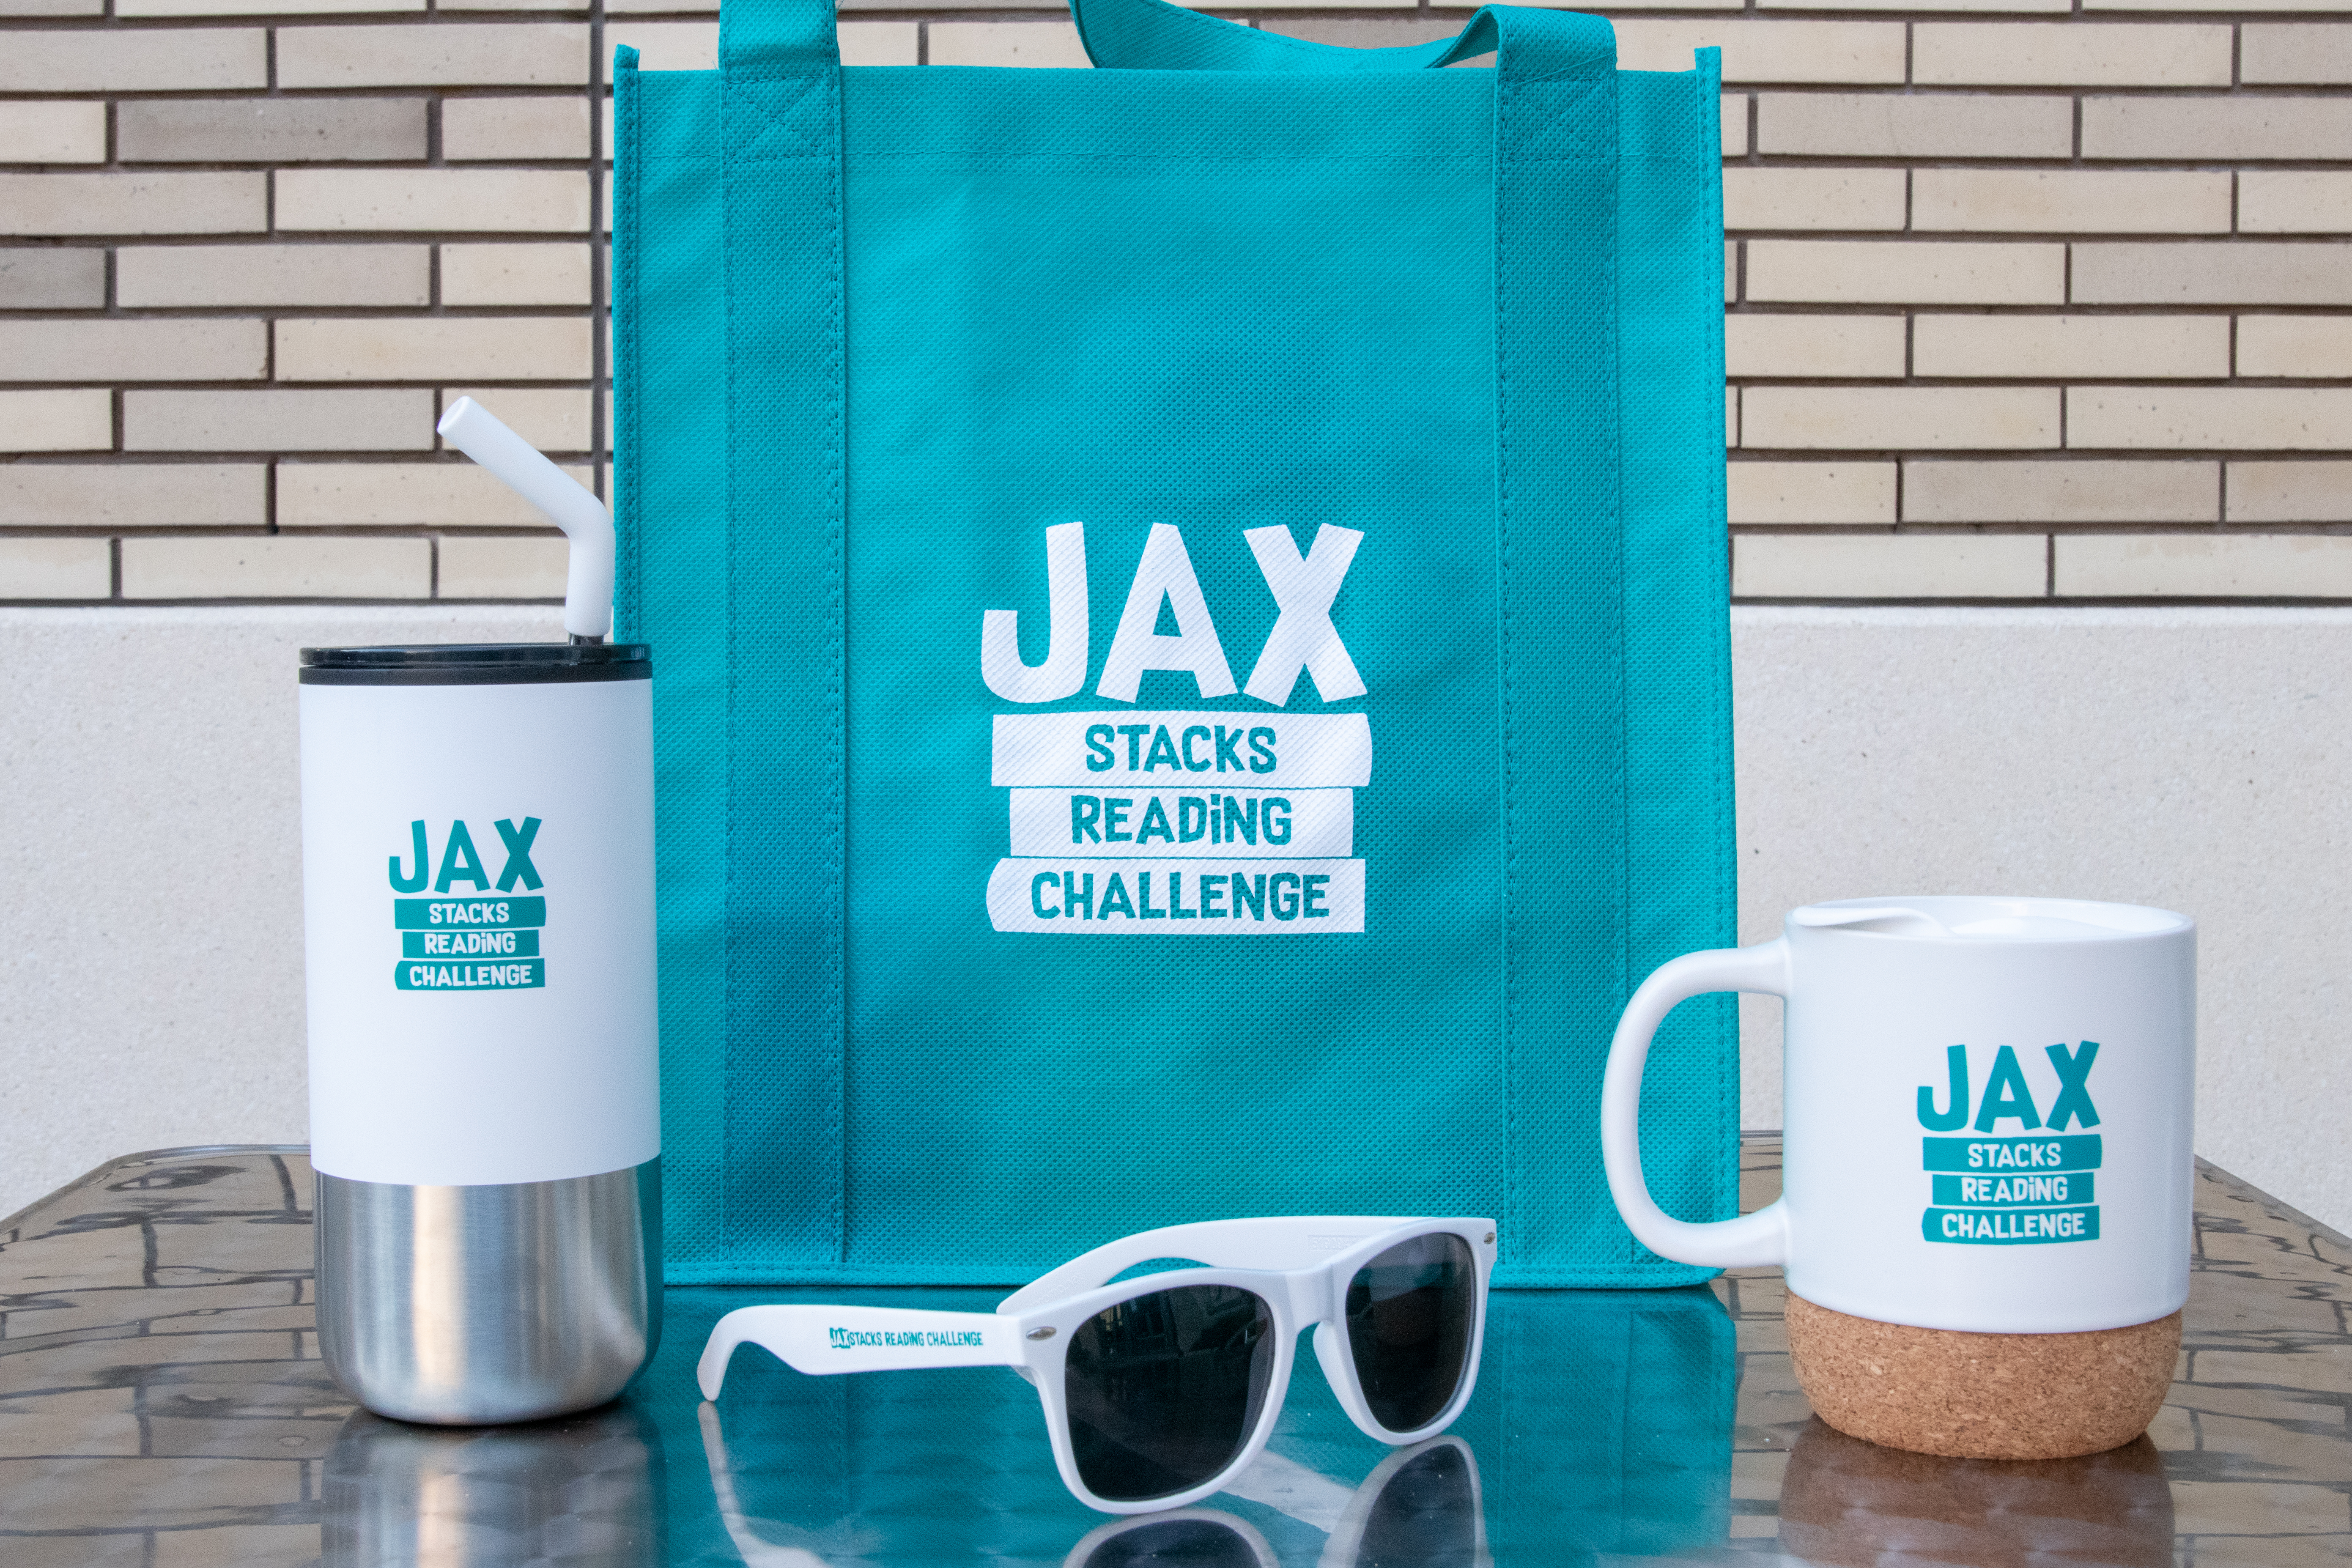 Jax Stacks branded prizes including a tote, mug, tumbler and sunglasses